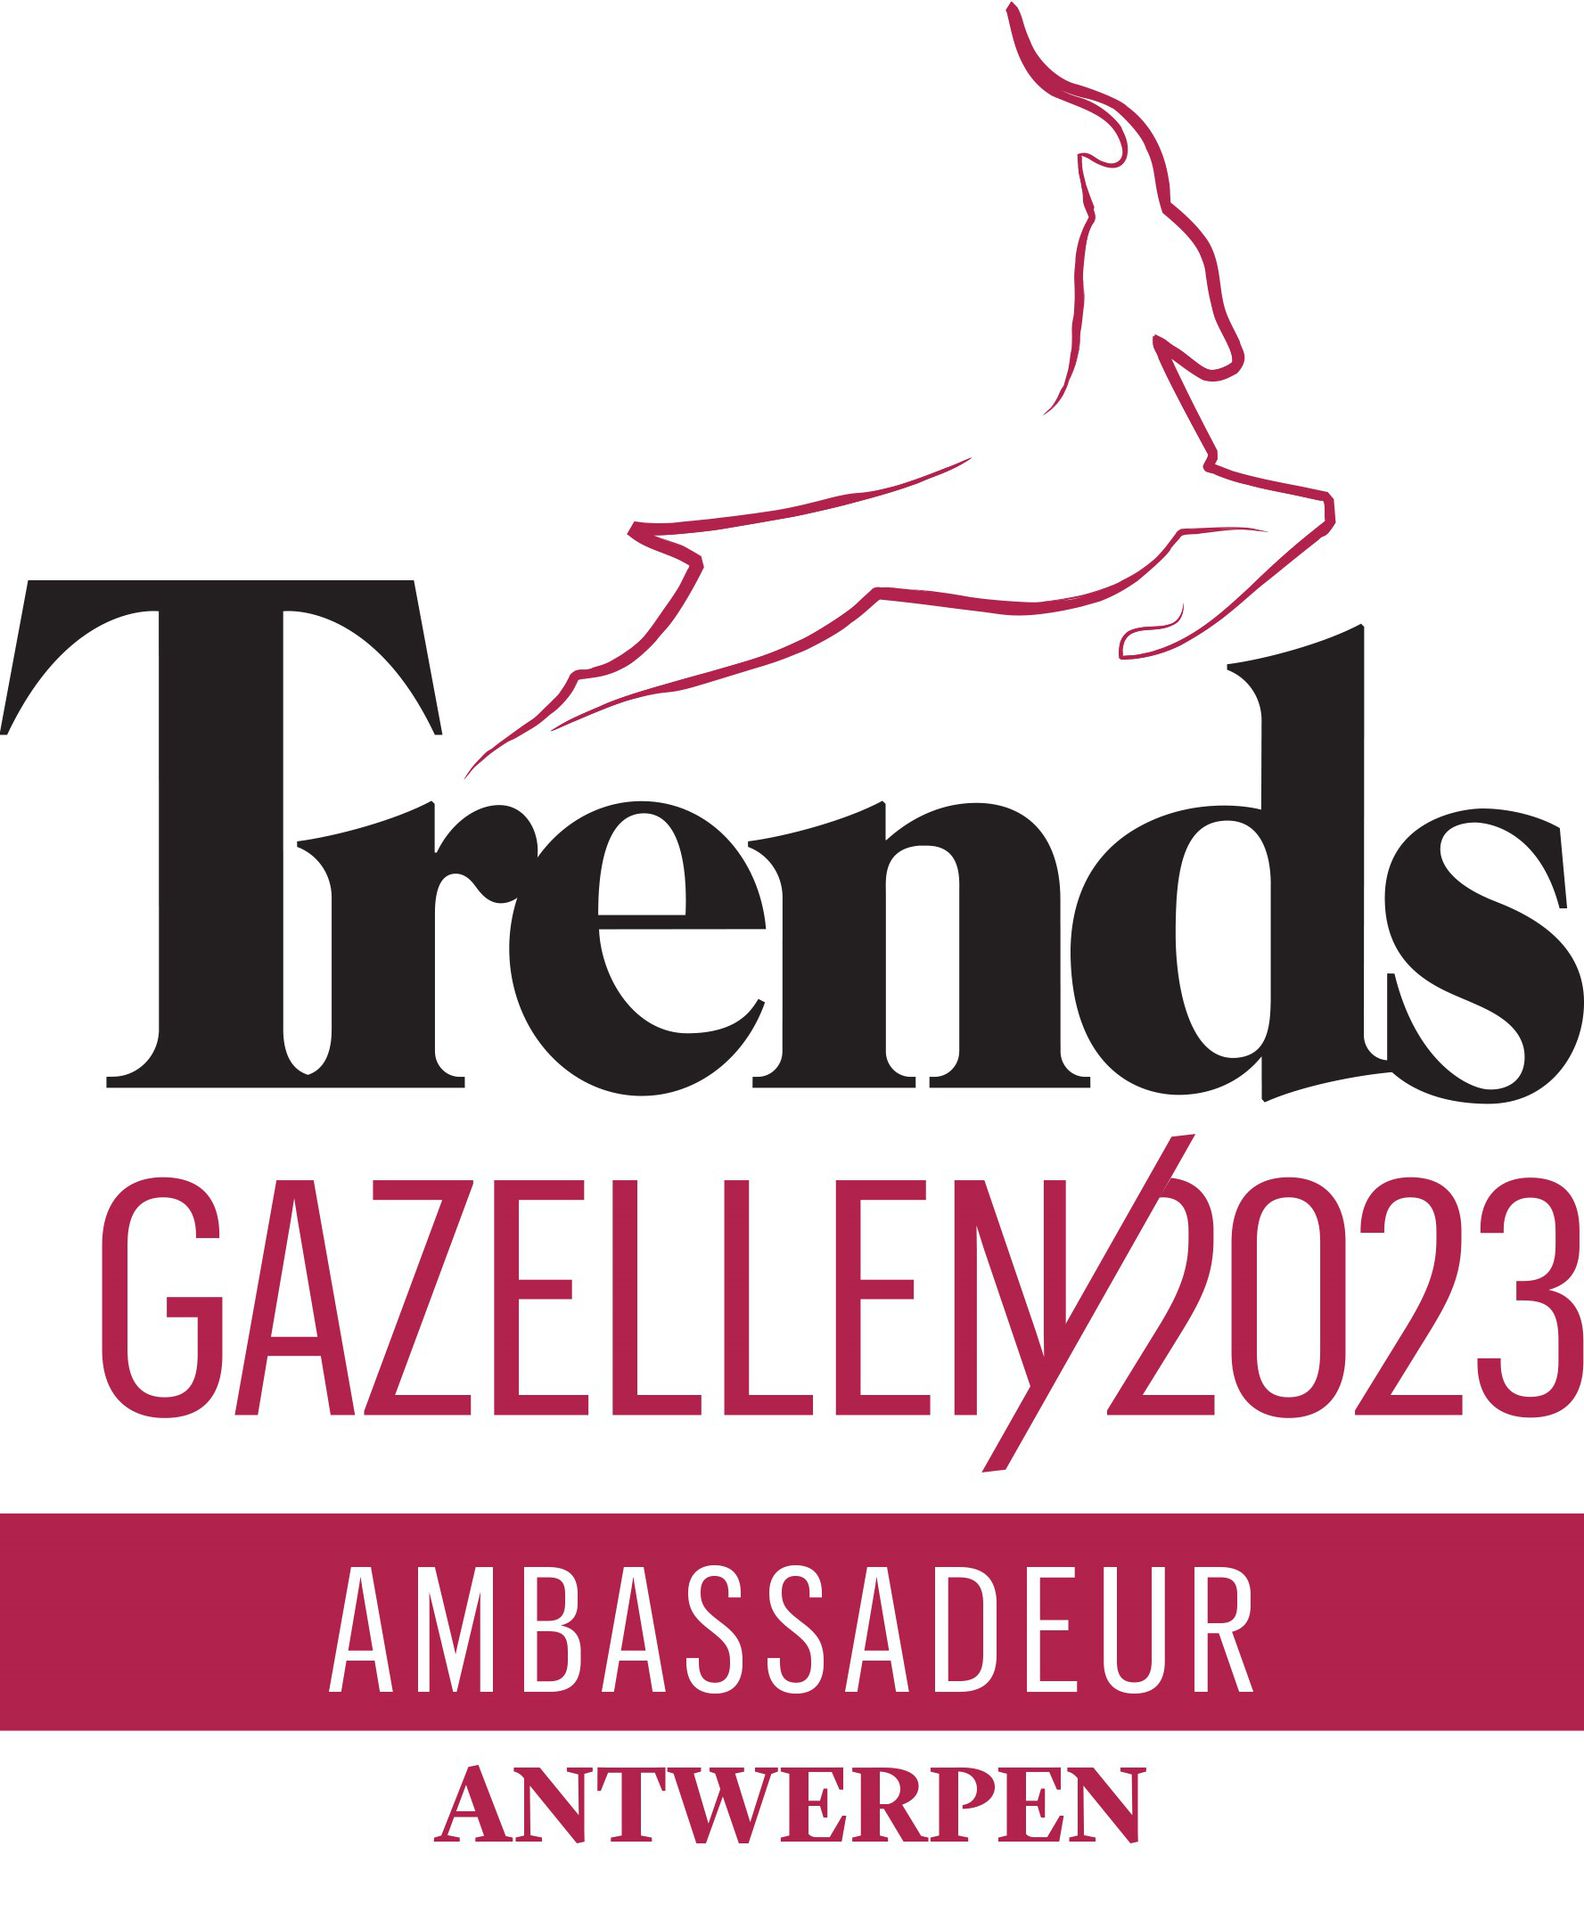 Ambassadeur des Gazelles Trends 2023